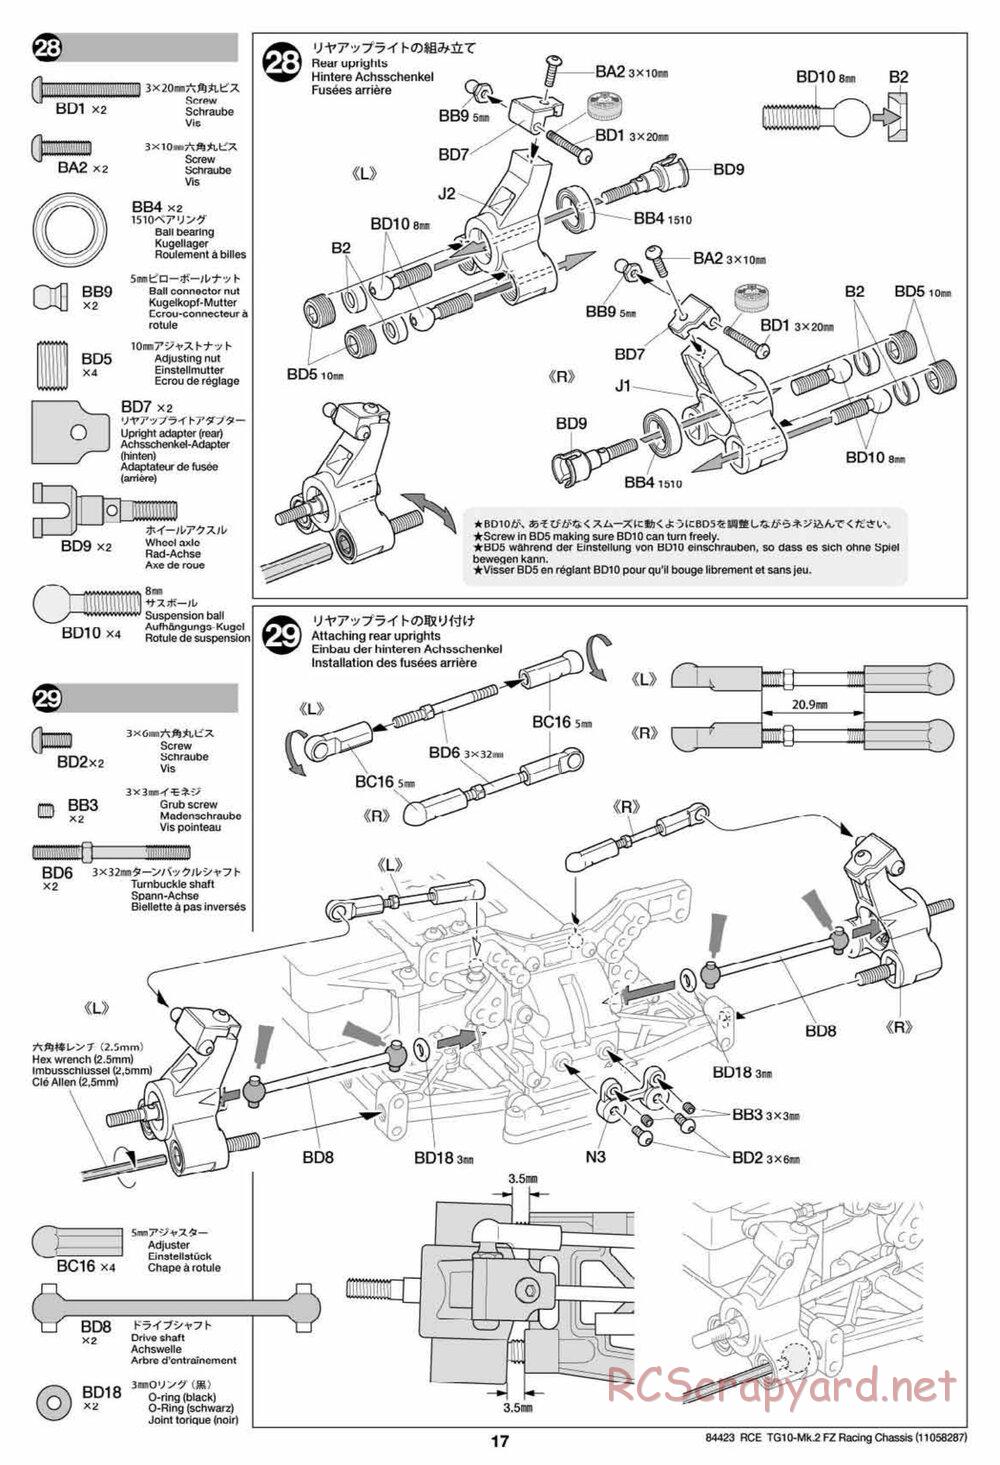 Tamiya - TG10 Mk.2 FZ Racing Chassis - Manual - Page 17